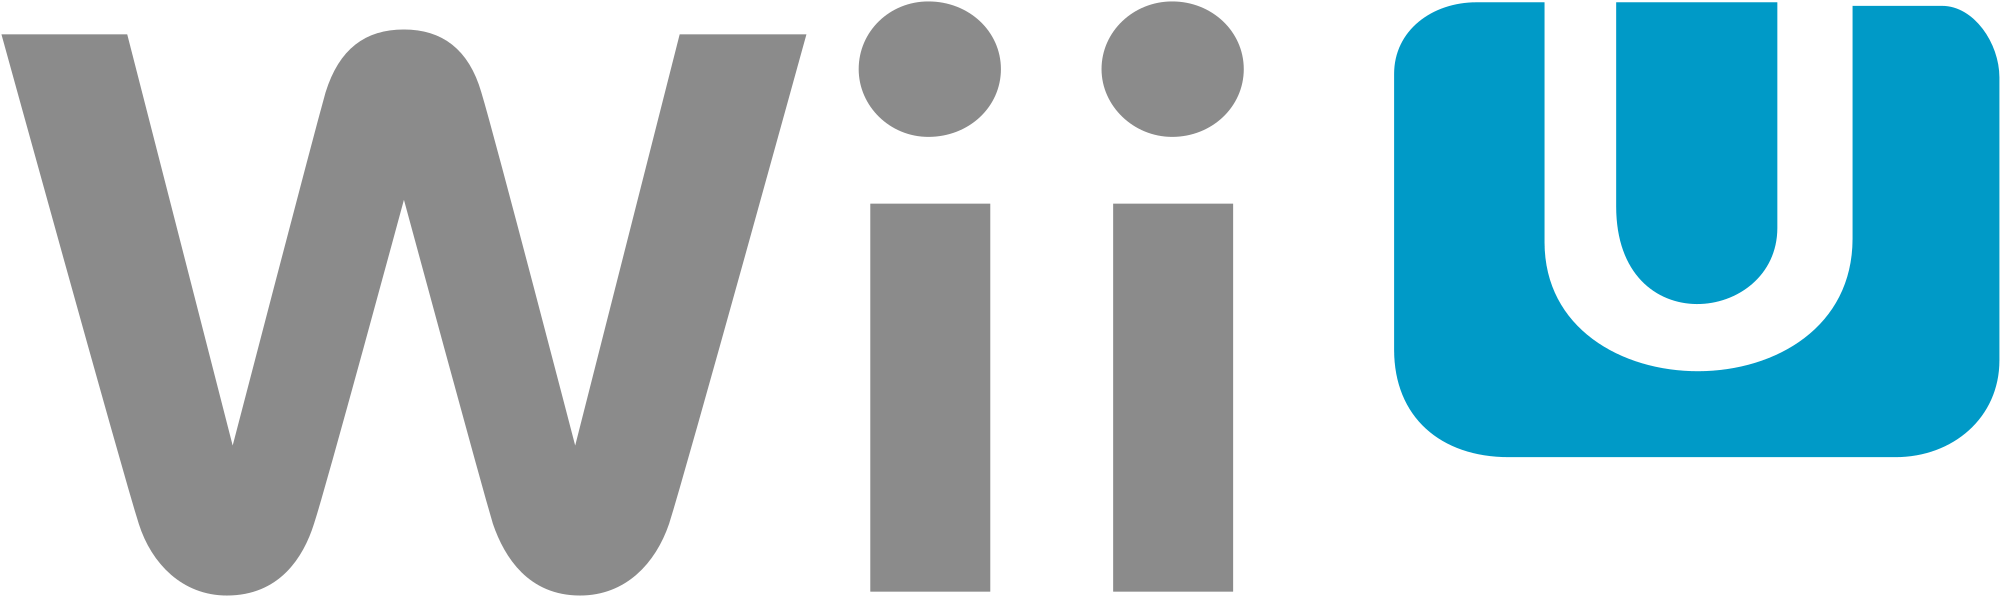 Wii U Logo - File:WiiU.svg - Wikimedia Commons